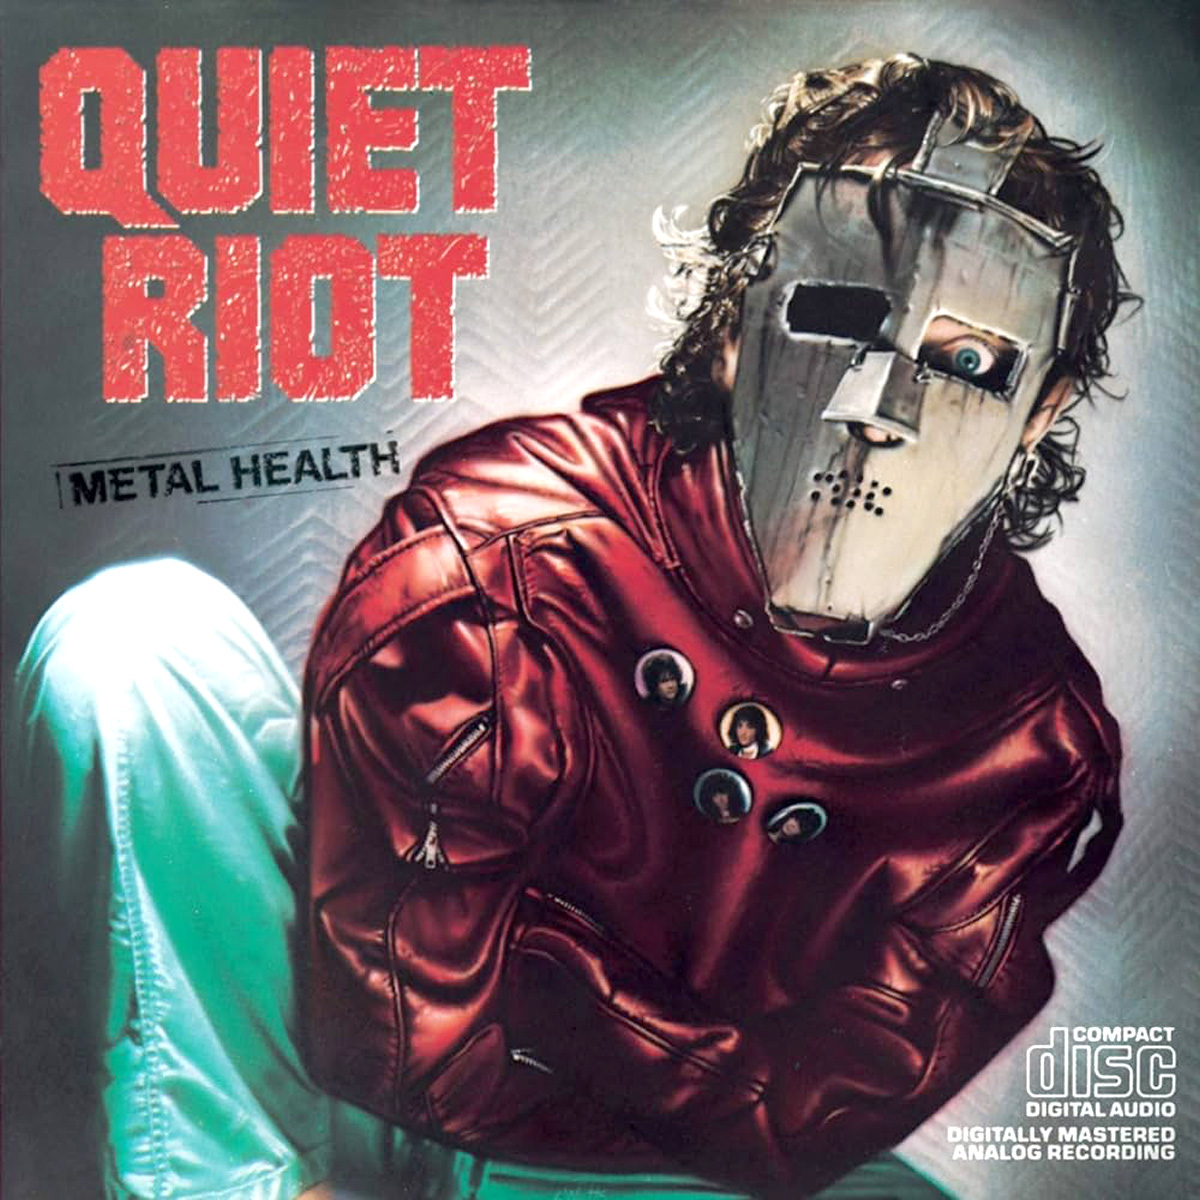 Metal Health cd cover